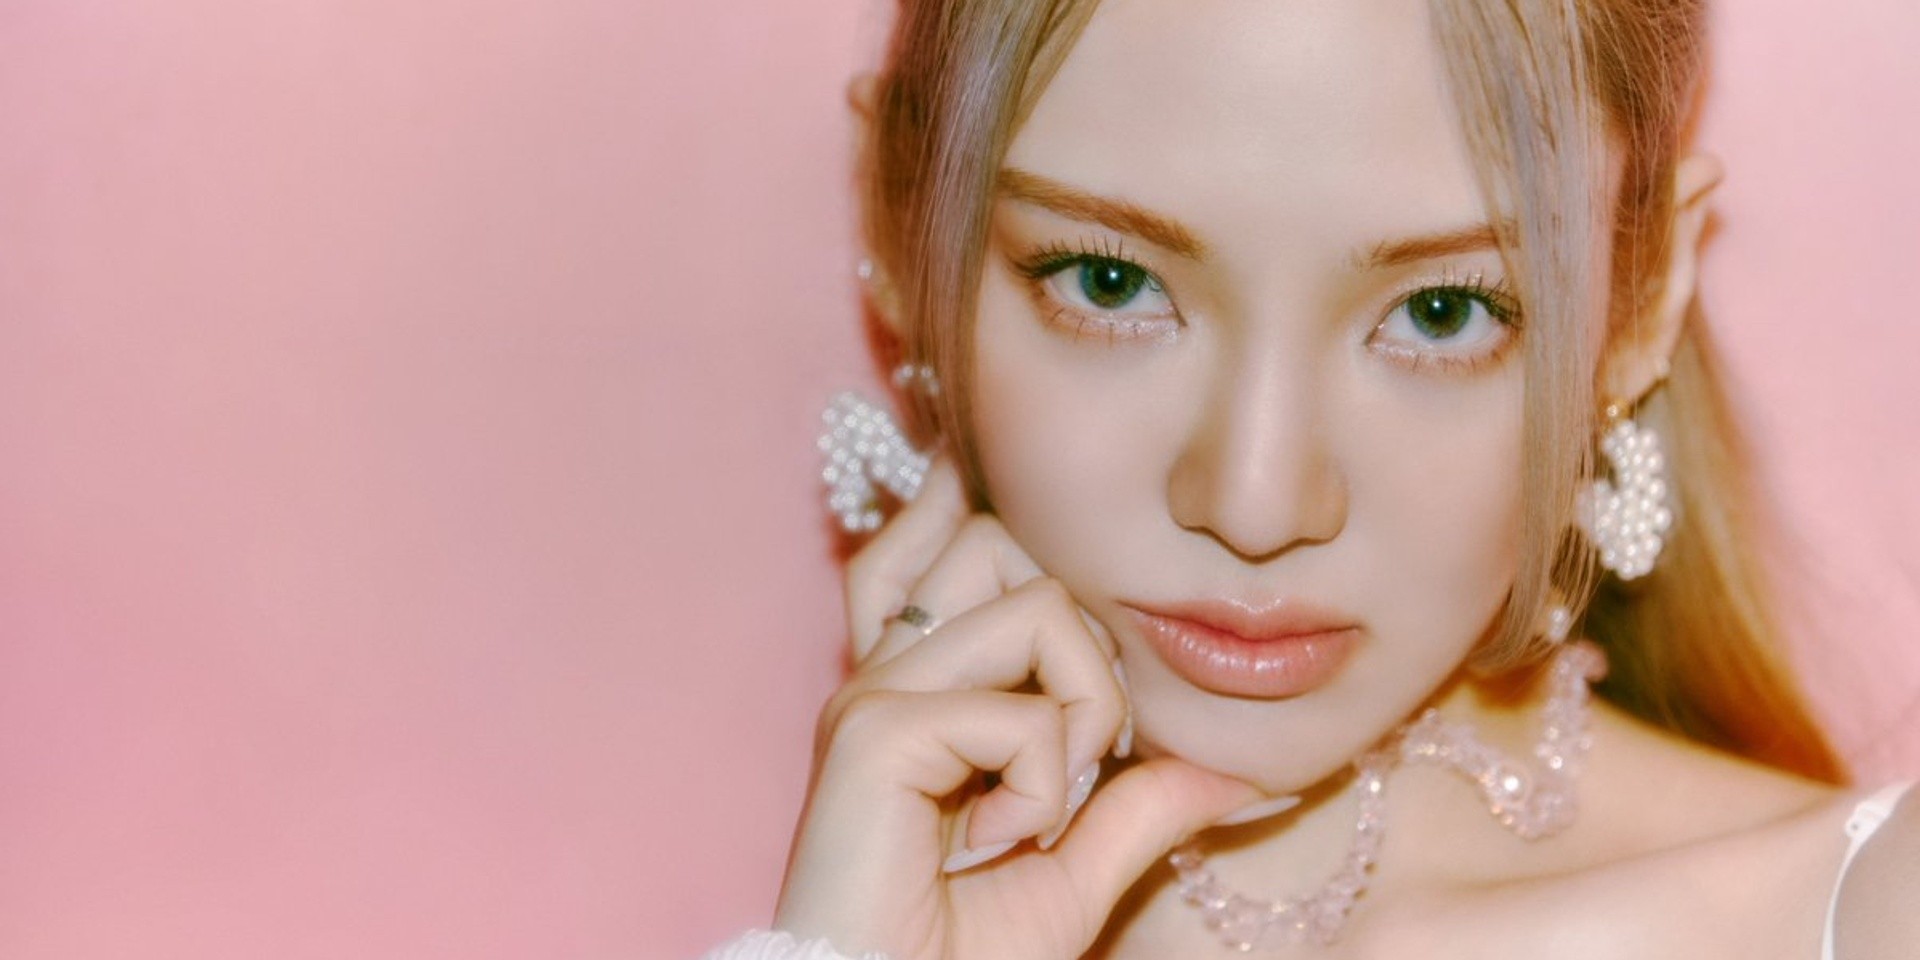 Girls' Generation's HYO drops long-awaited single 'Second' featuring BIBI - watch